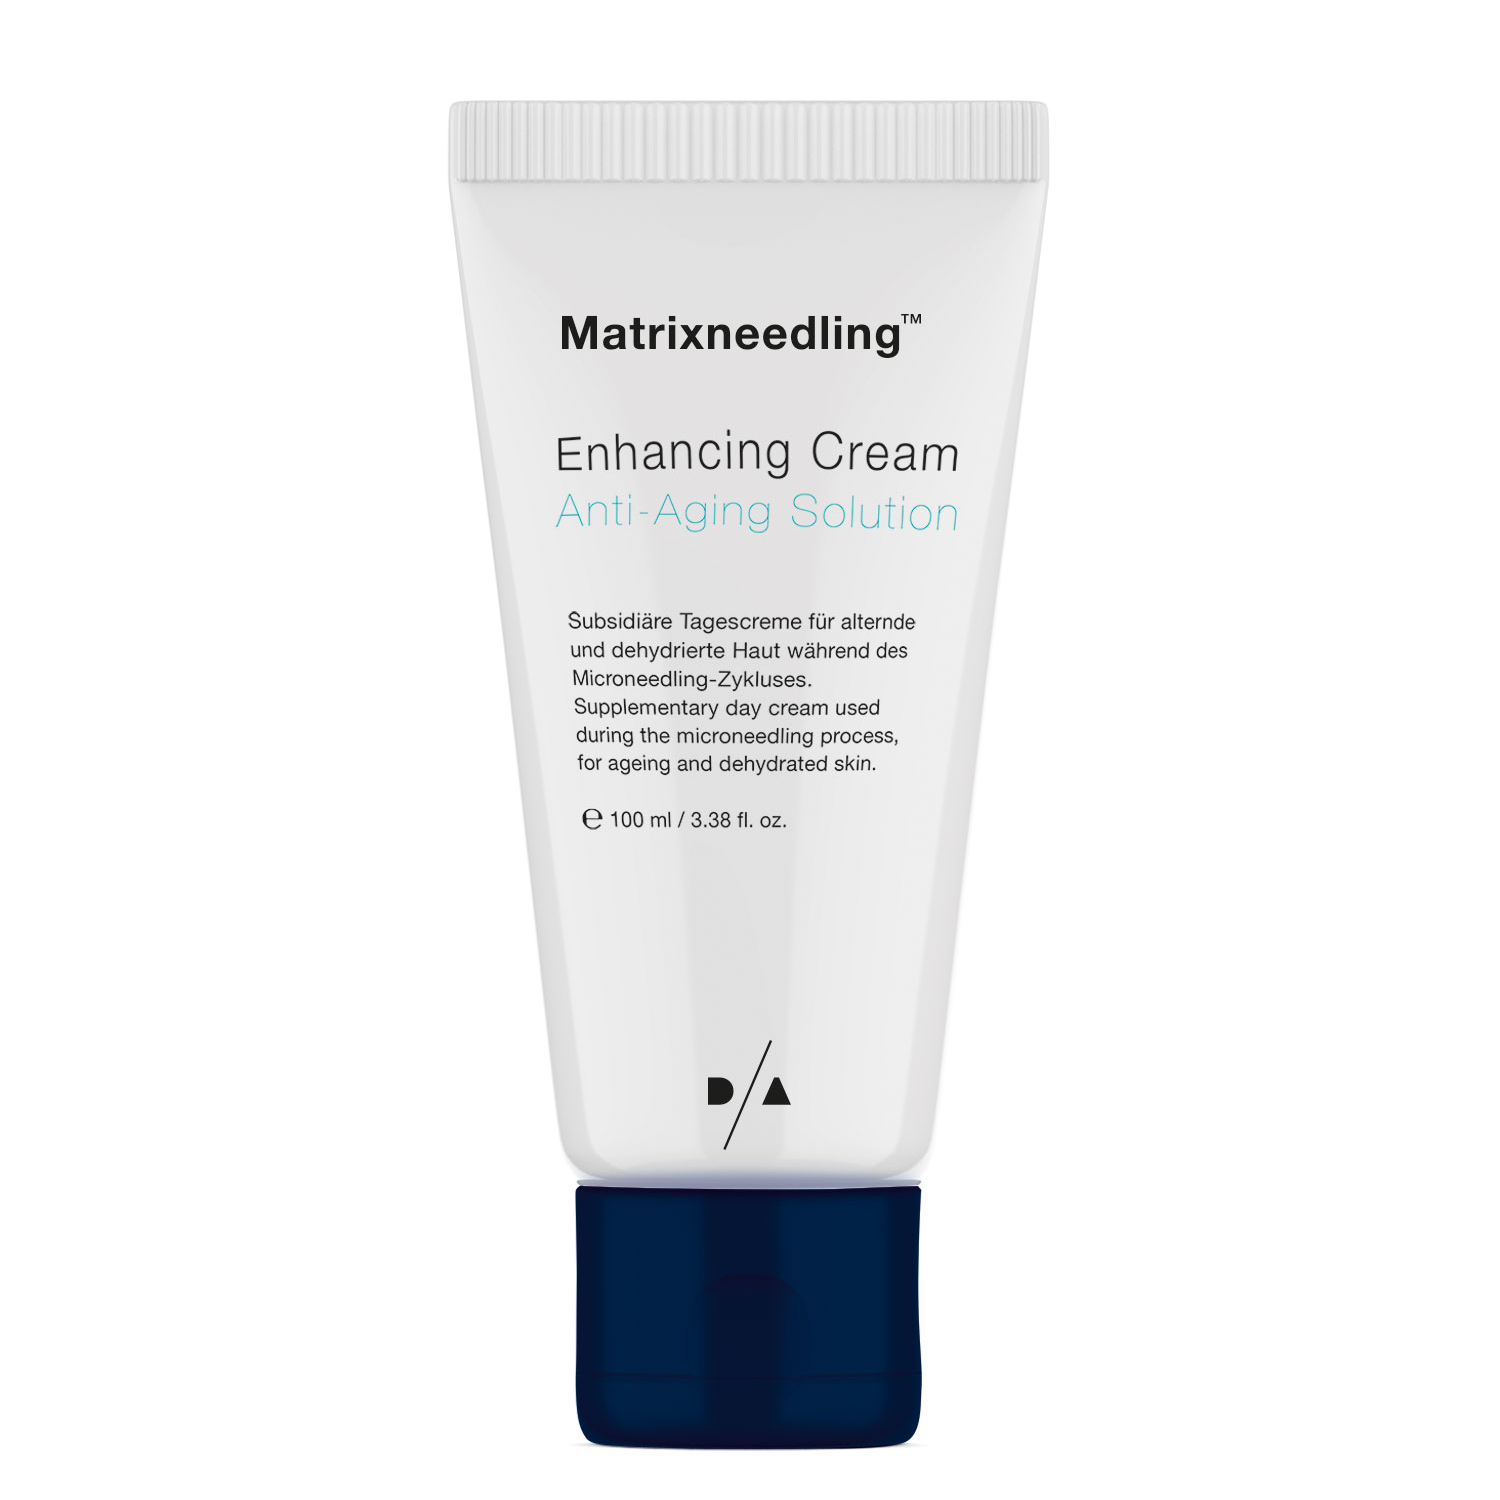 Enhancing Cream